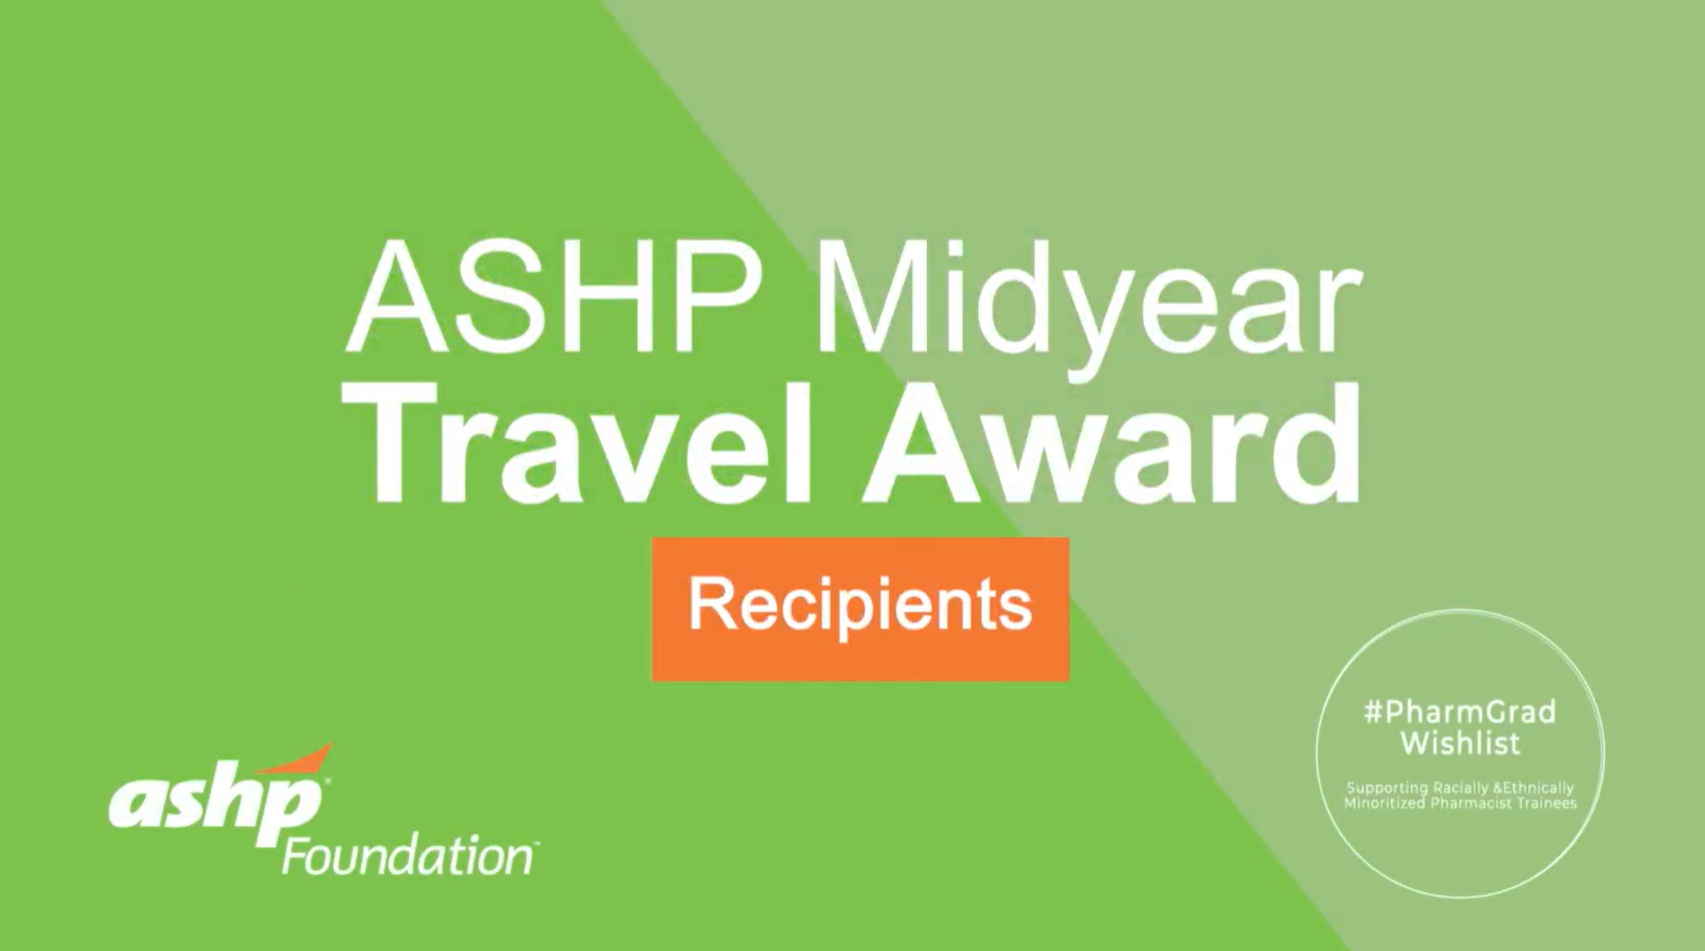 ASHP Midyear Travel Award